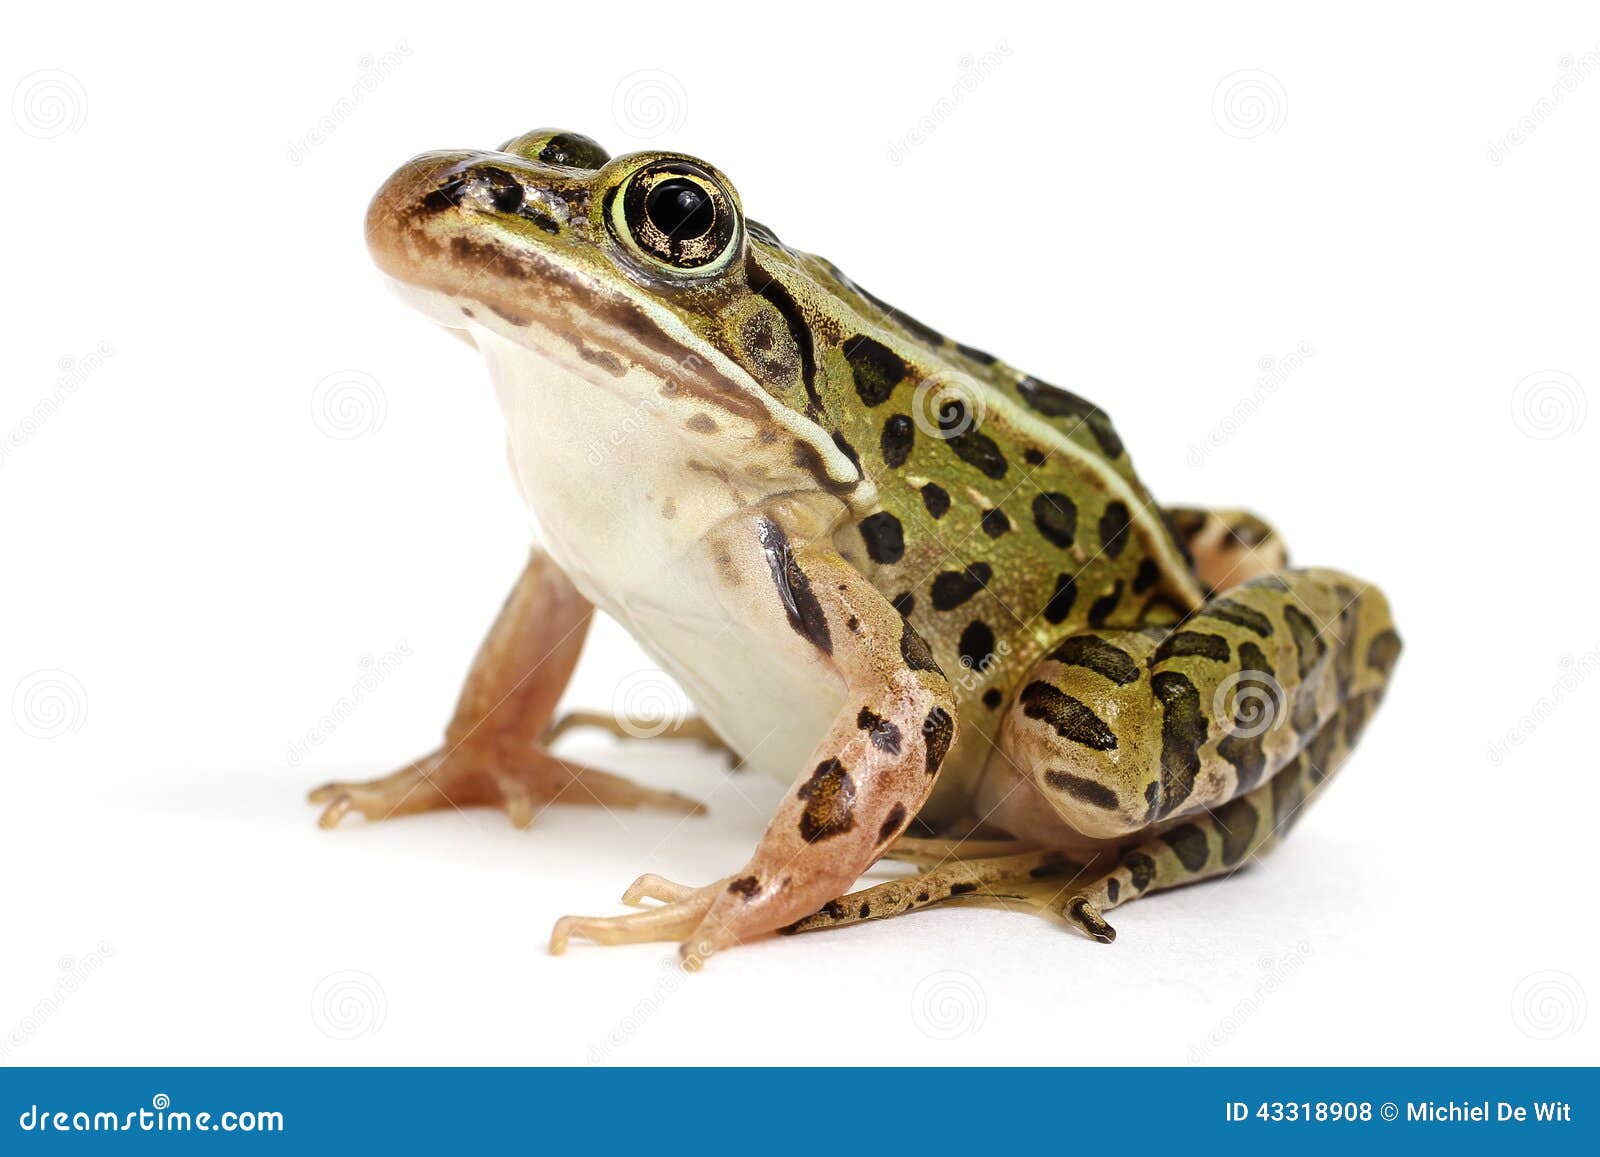 northern leopard frog (lithobates pipiens)